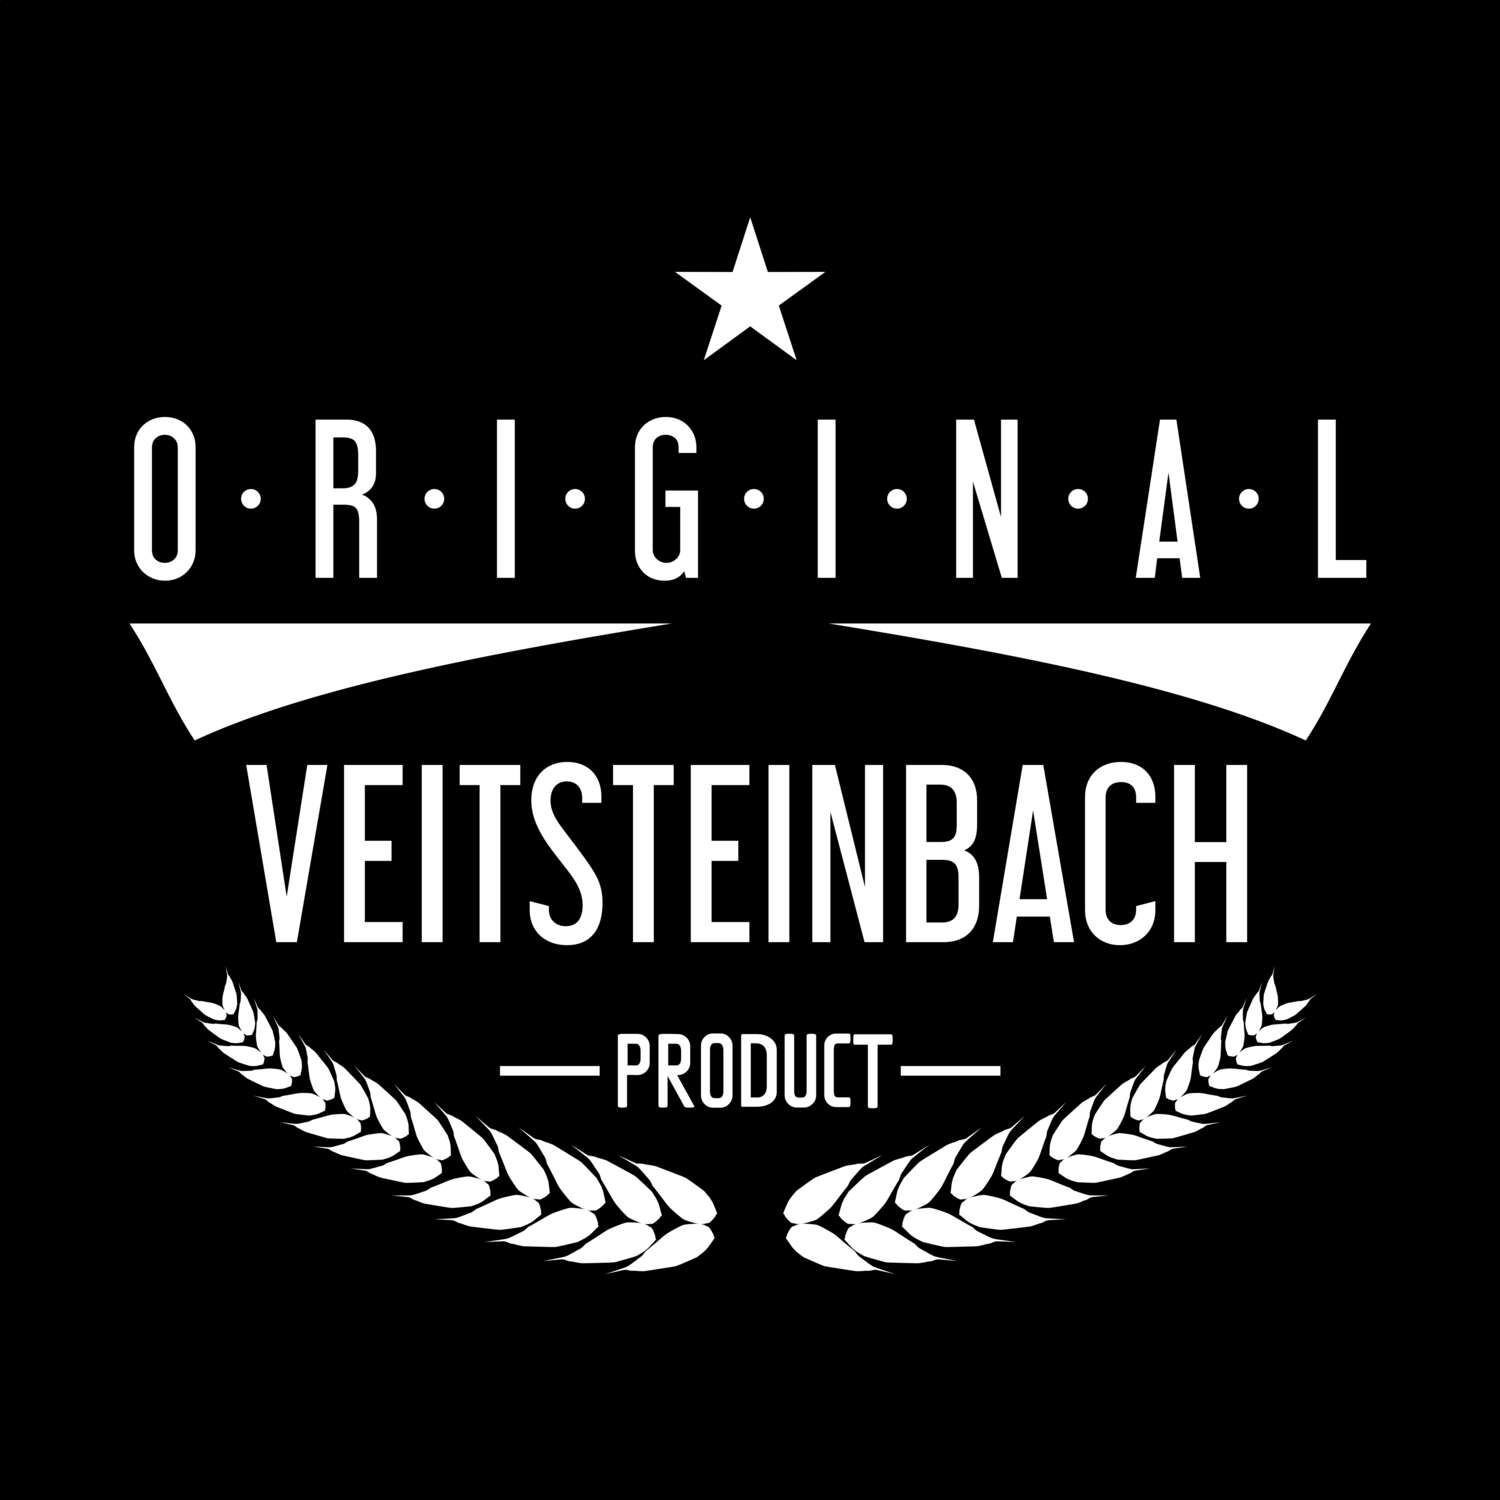 Veitsteinbach T-Shirt »Original Product«